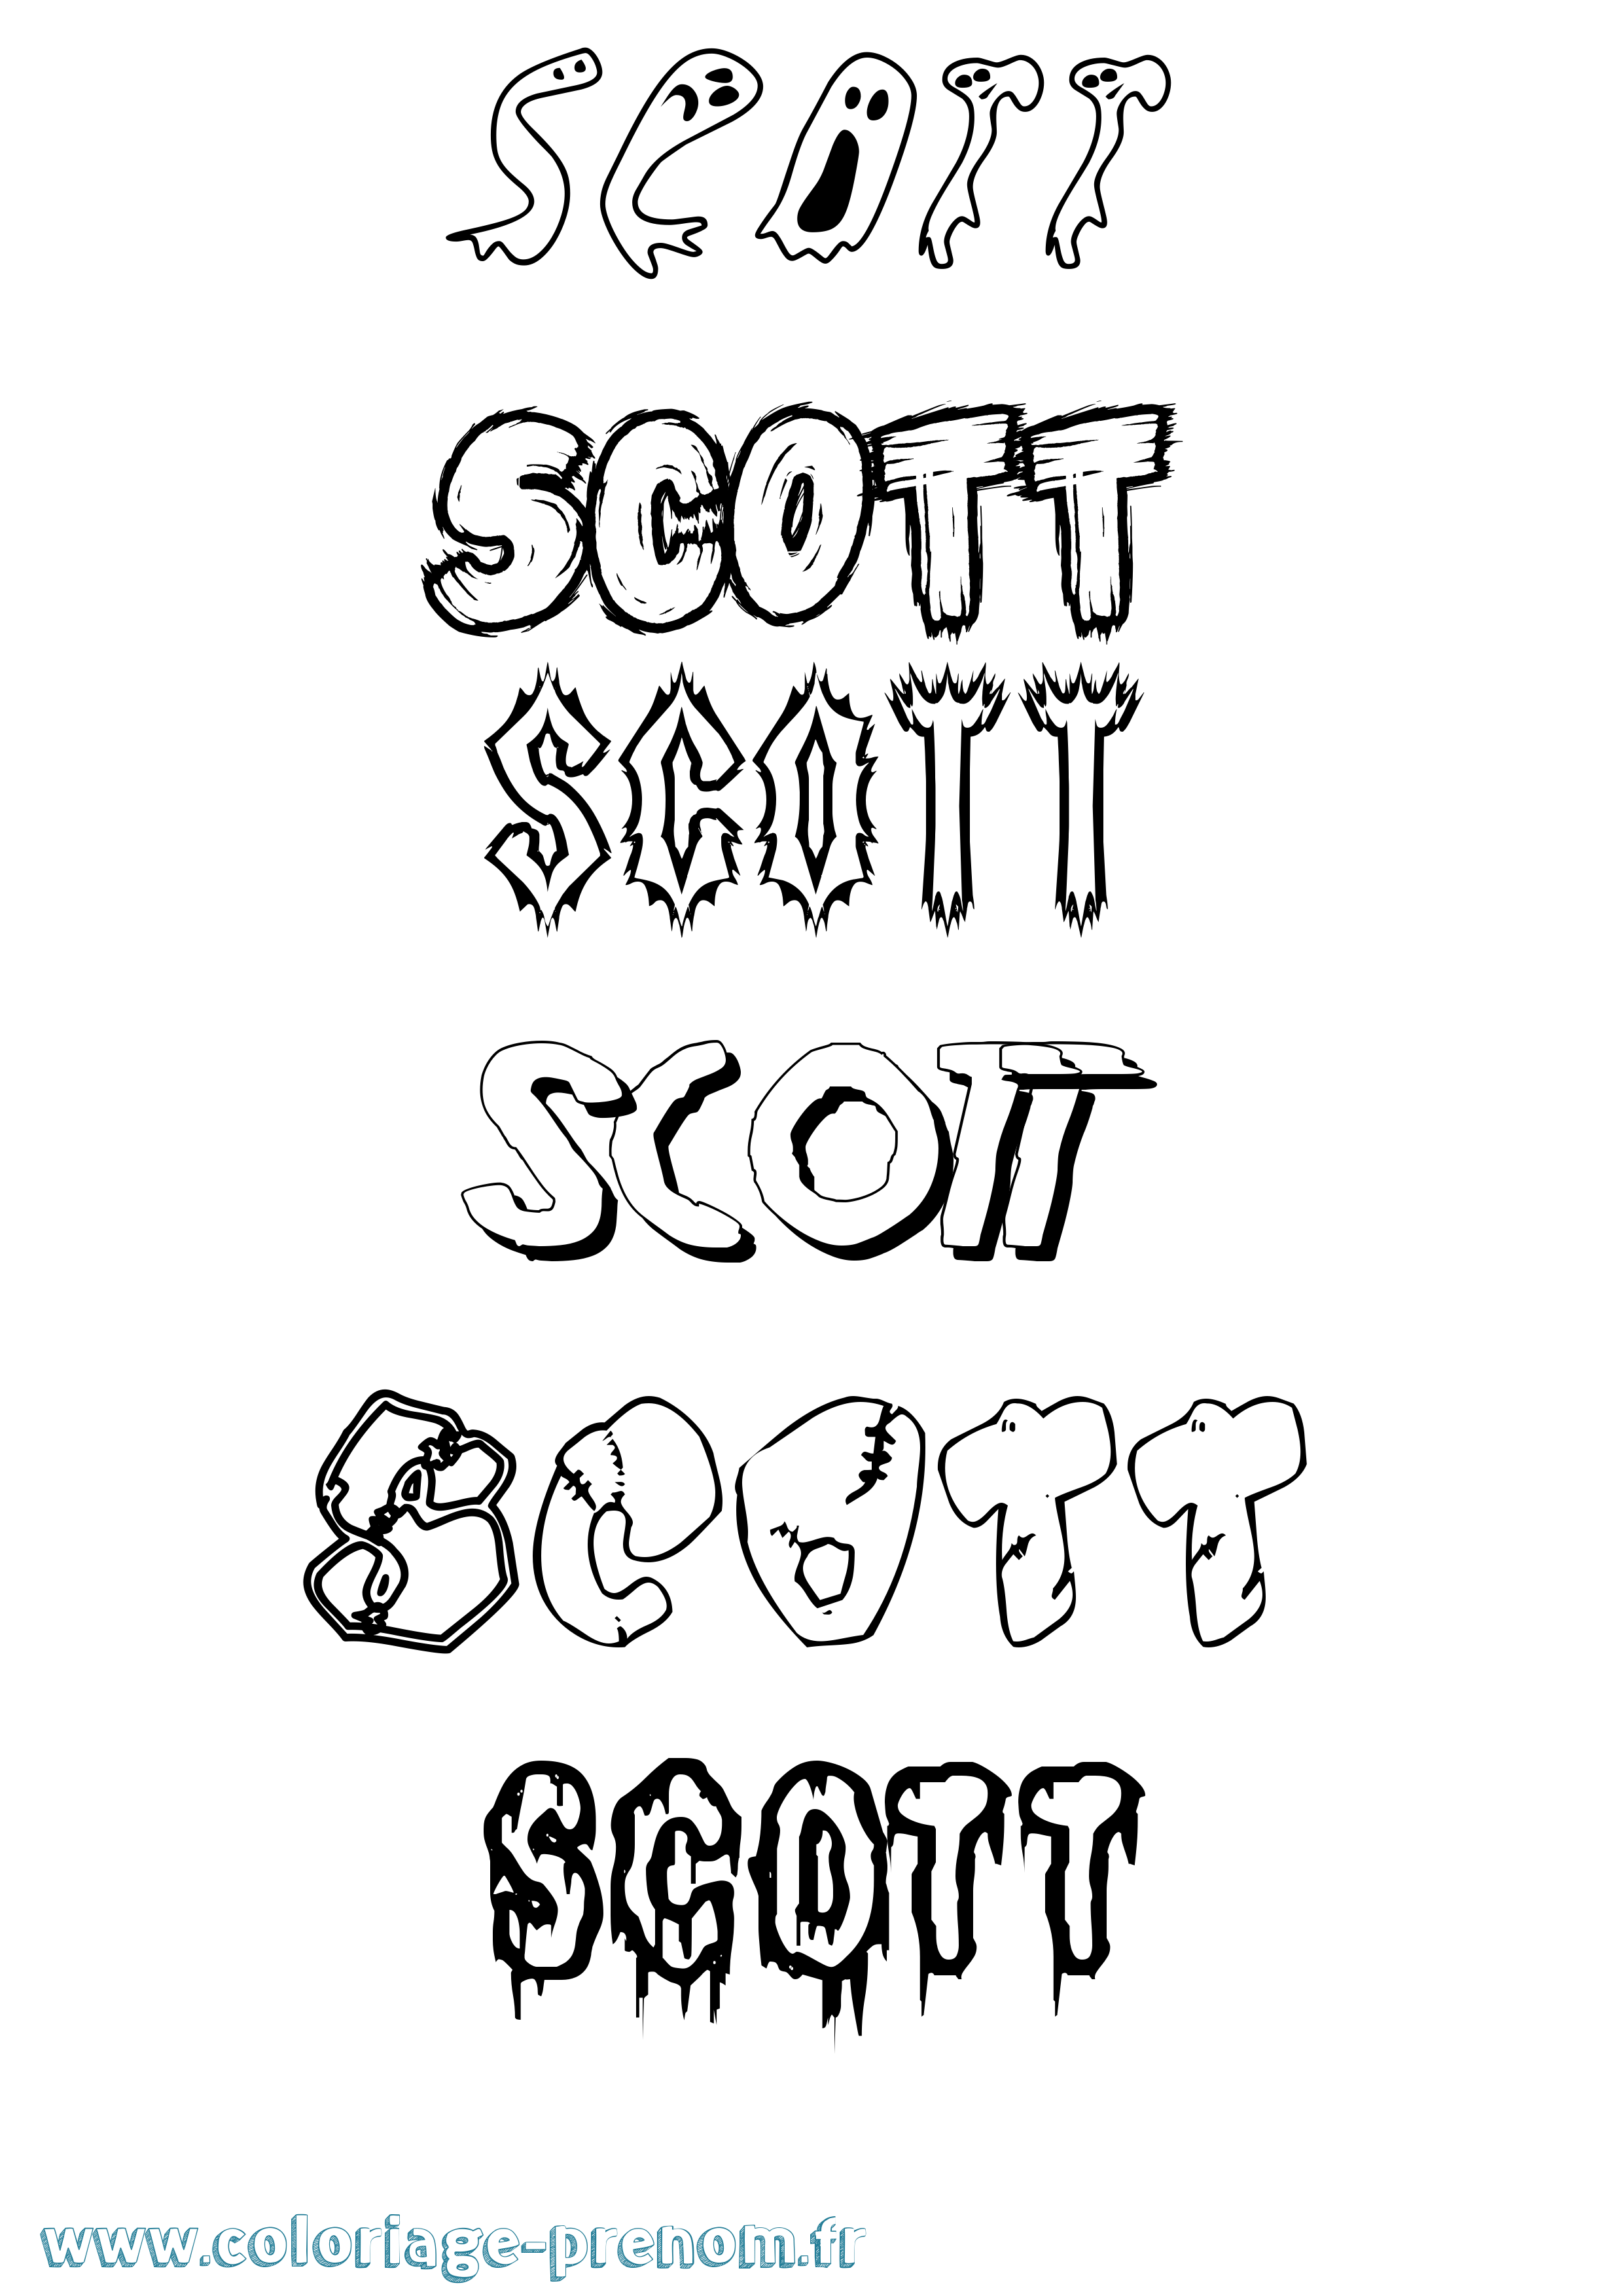 Coloriage prénom Scott